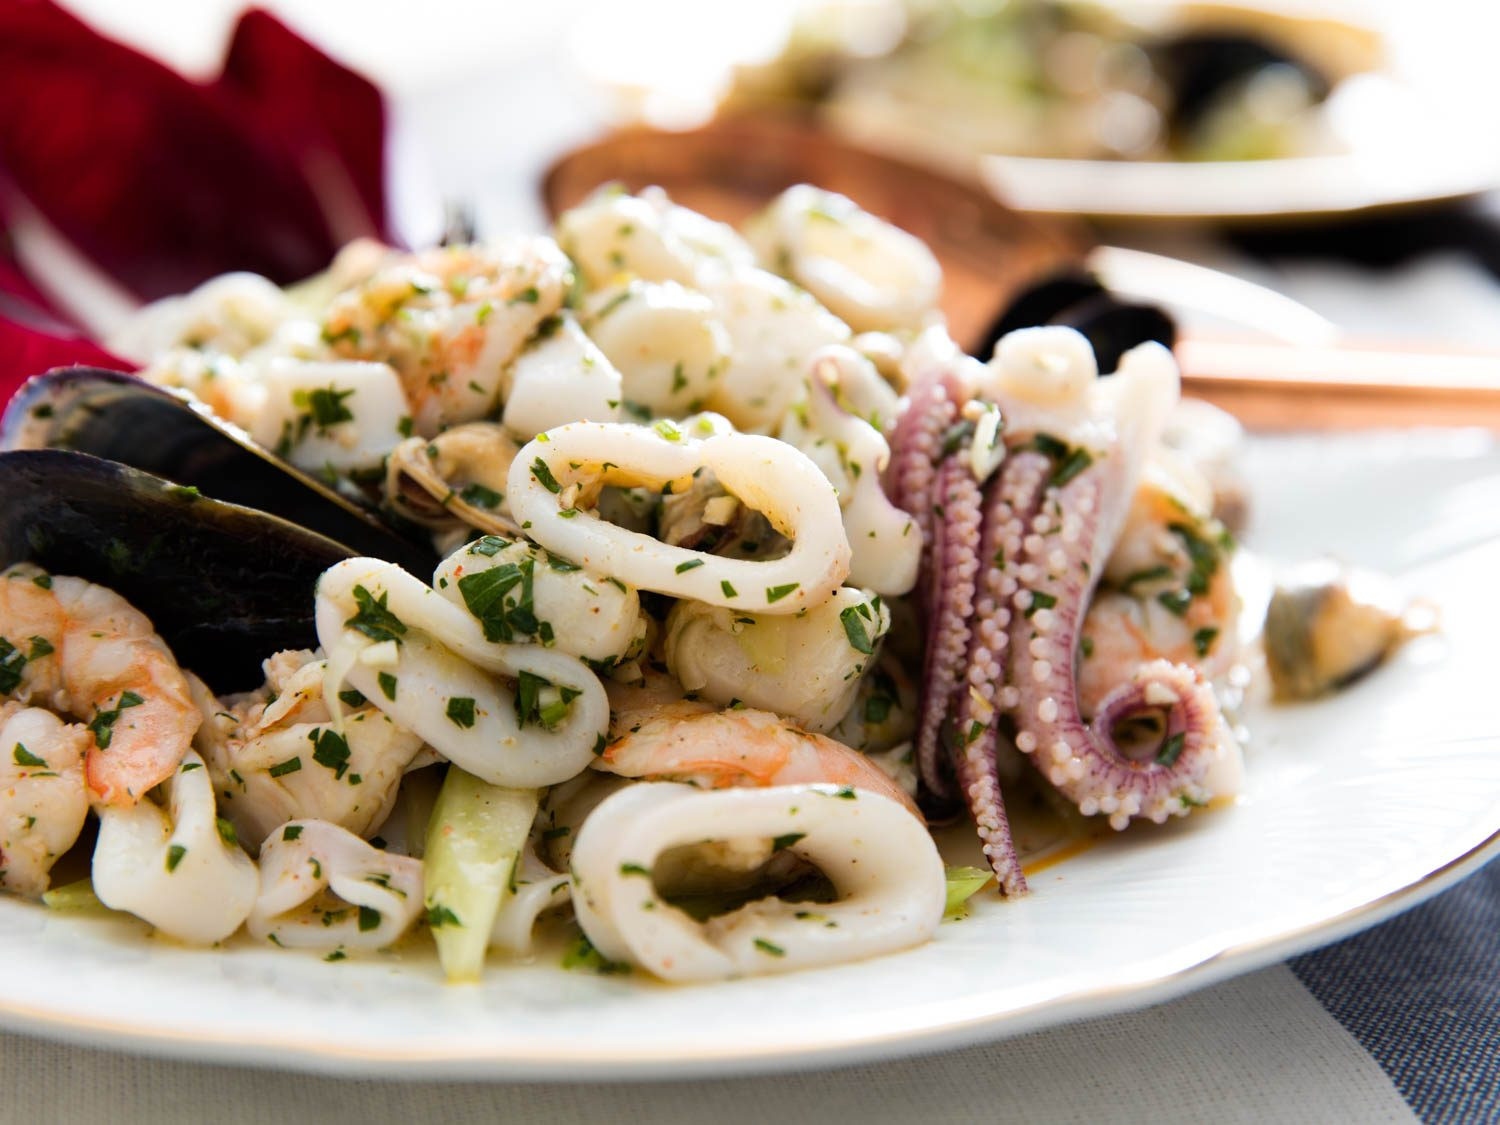 Recipes Using Salad Shrimp
 Italian Seafood Salad Insalata di Mare Recipe